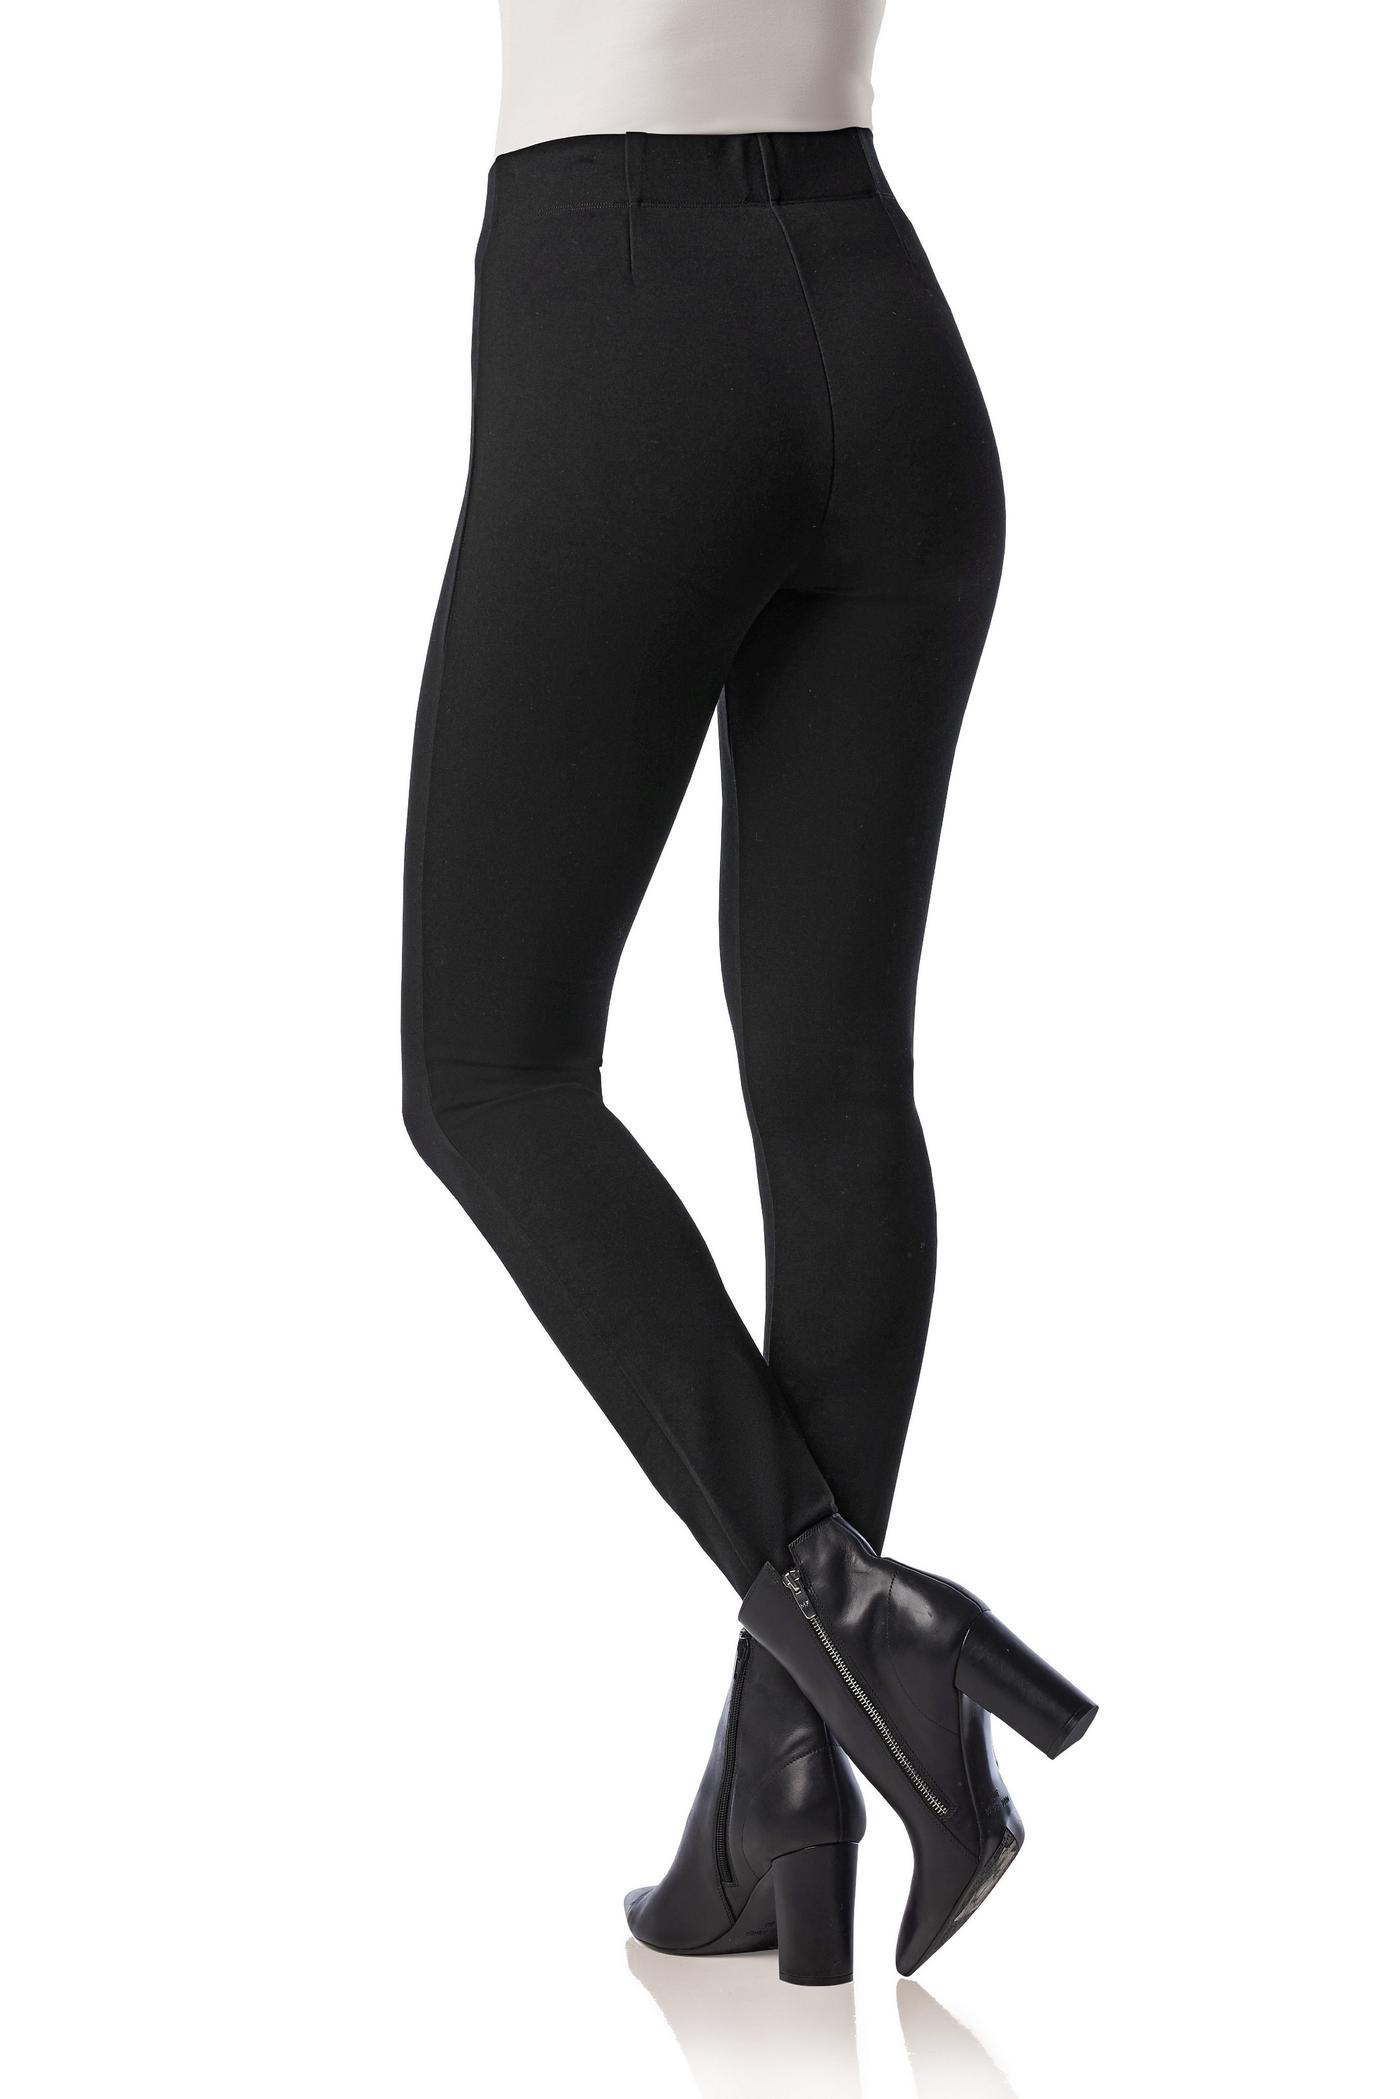 I-N-C Womens Ponte-Knit Casual Leggings, Black, 18W at  Women's  Clothing store